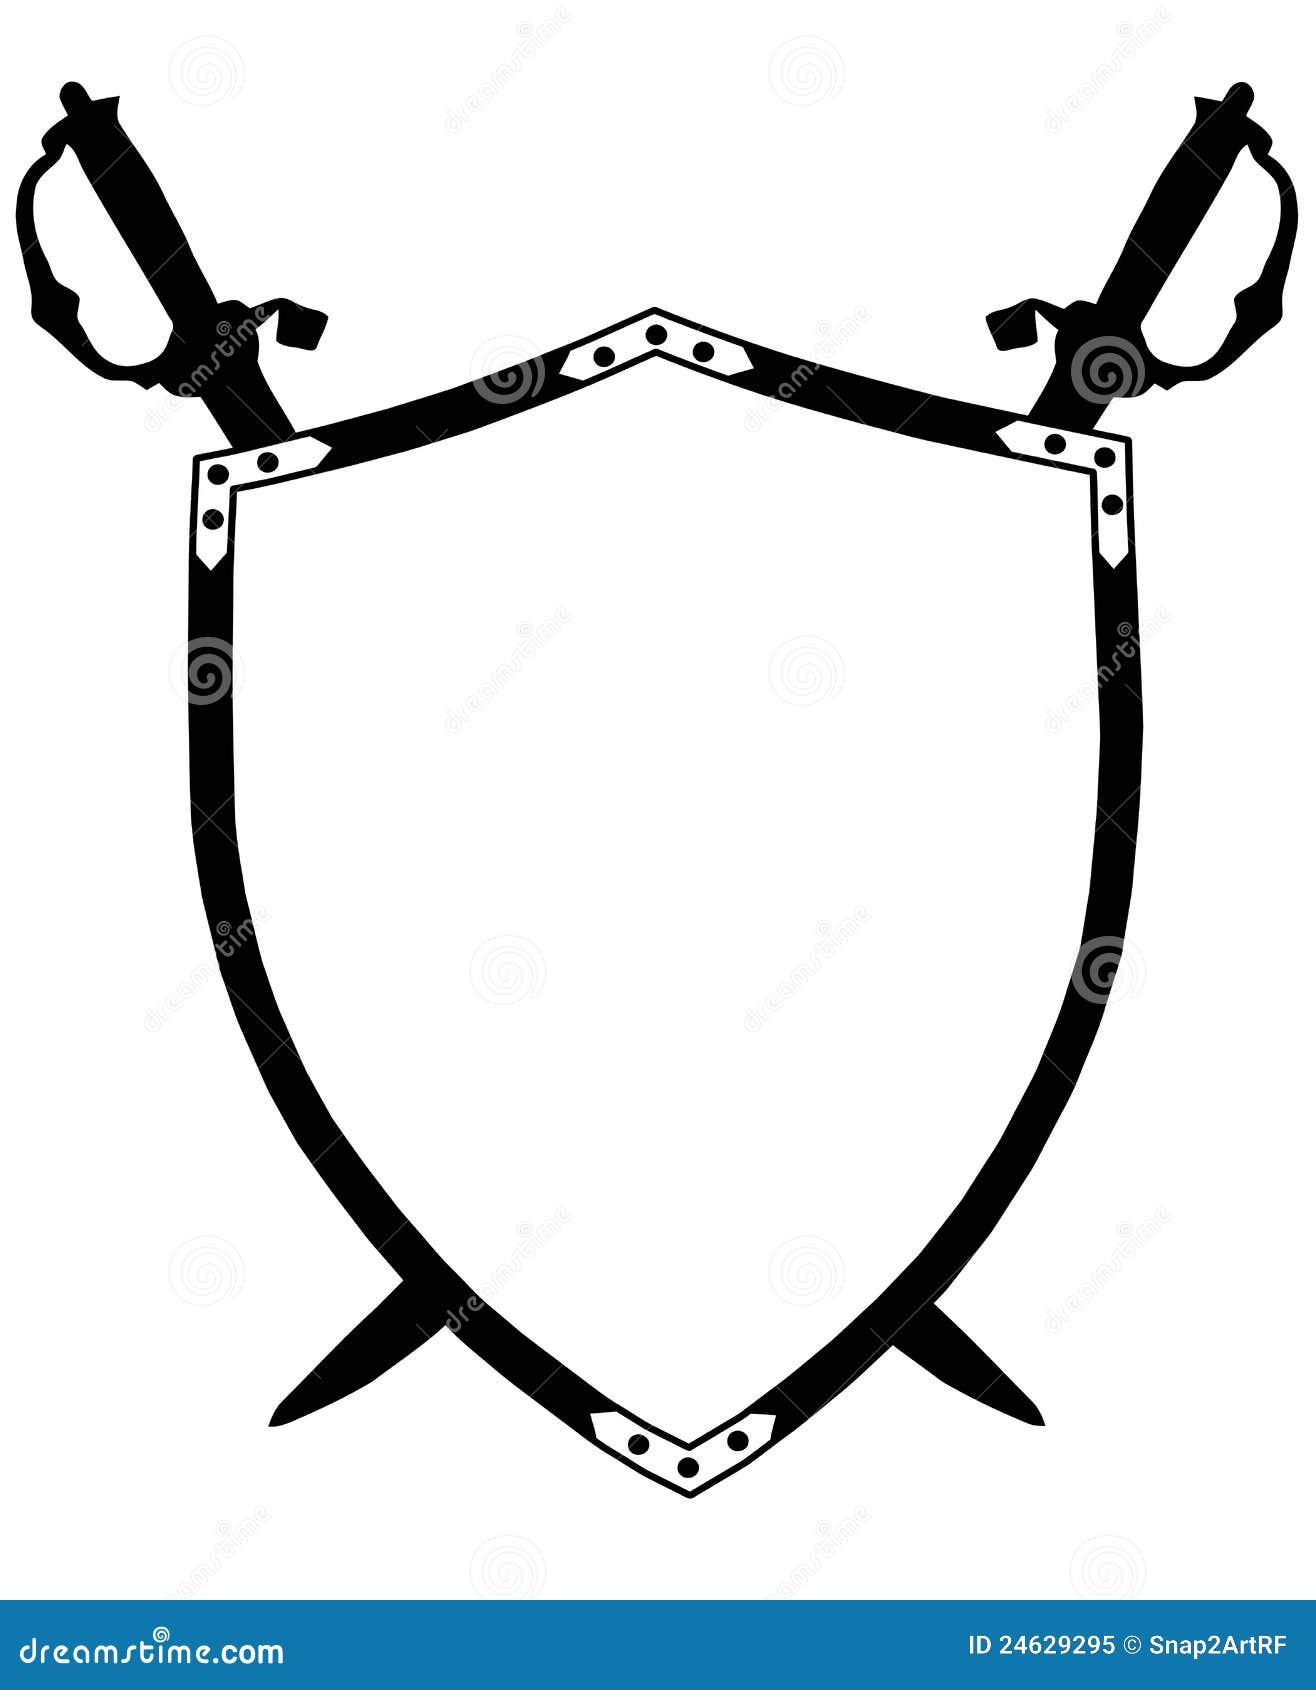  16th century war shield crossed swords